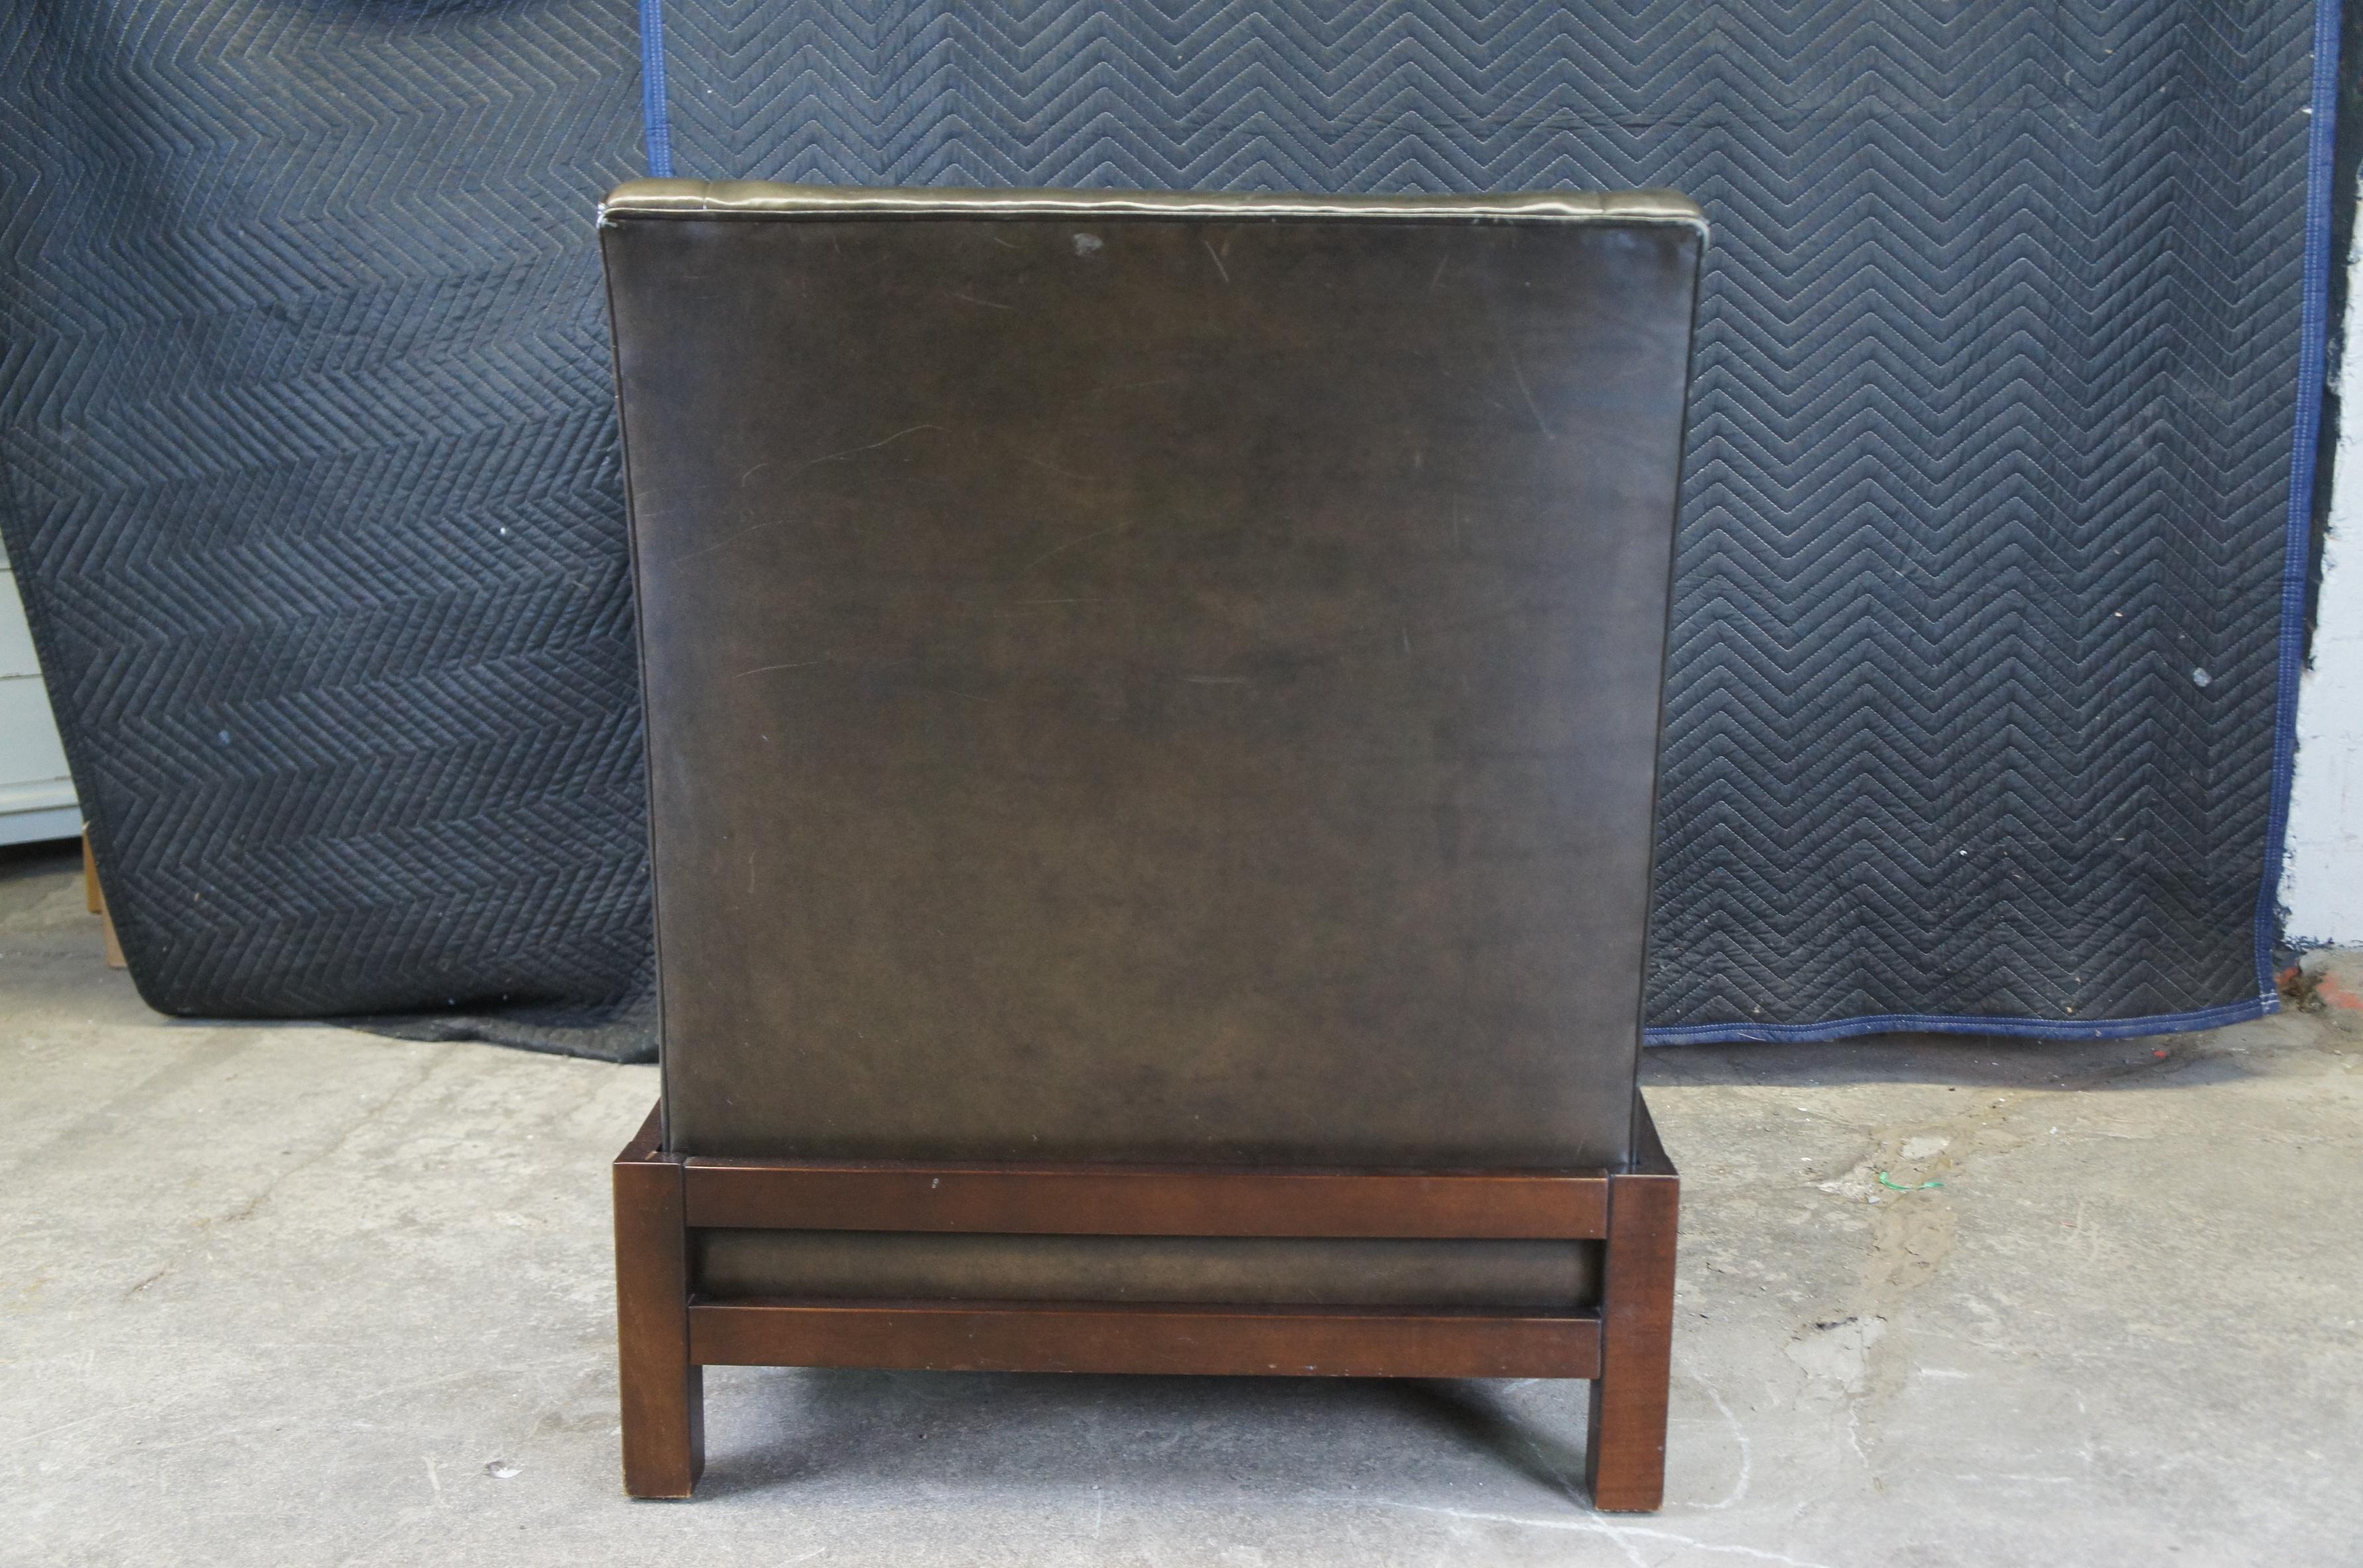 Vintage Baker Furniture Laura Kirar Modern Black Leather Neue Club Lounge Chair For Sale 1